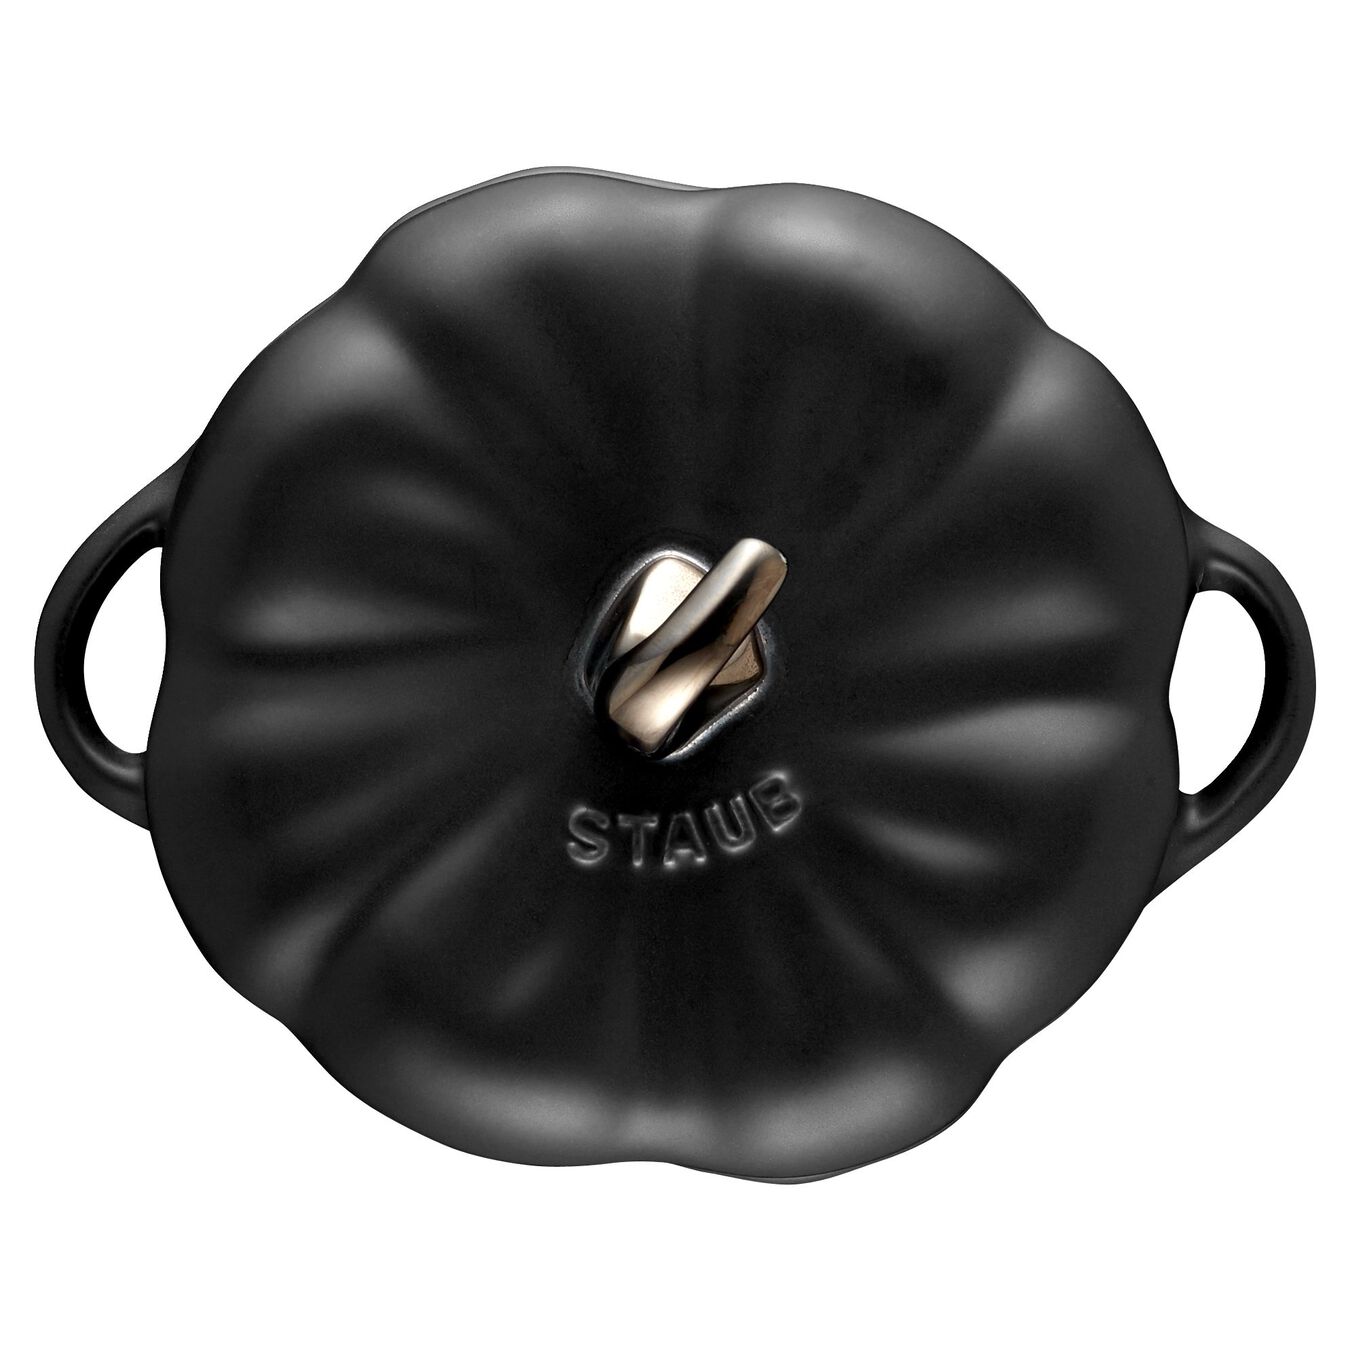 12 cm pumpkin Ceramic Cocotte black,,large 3